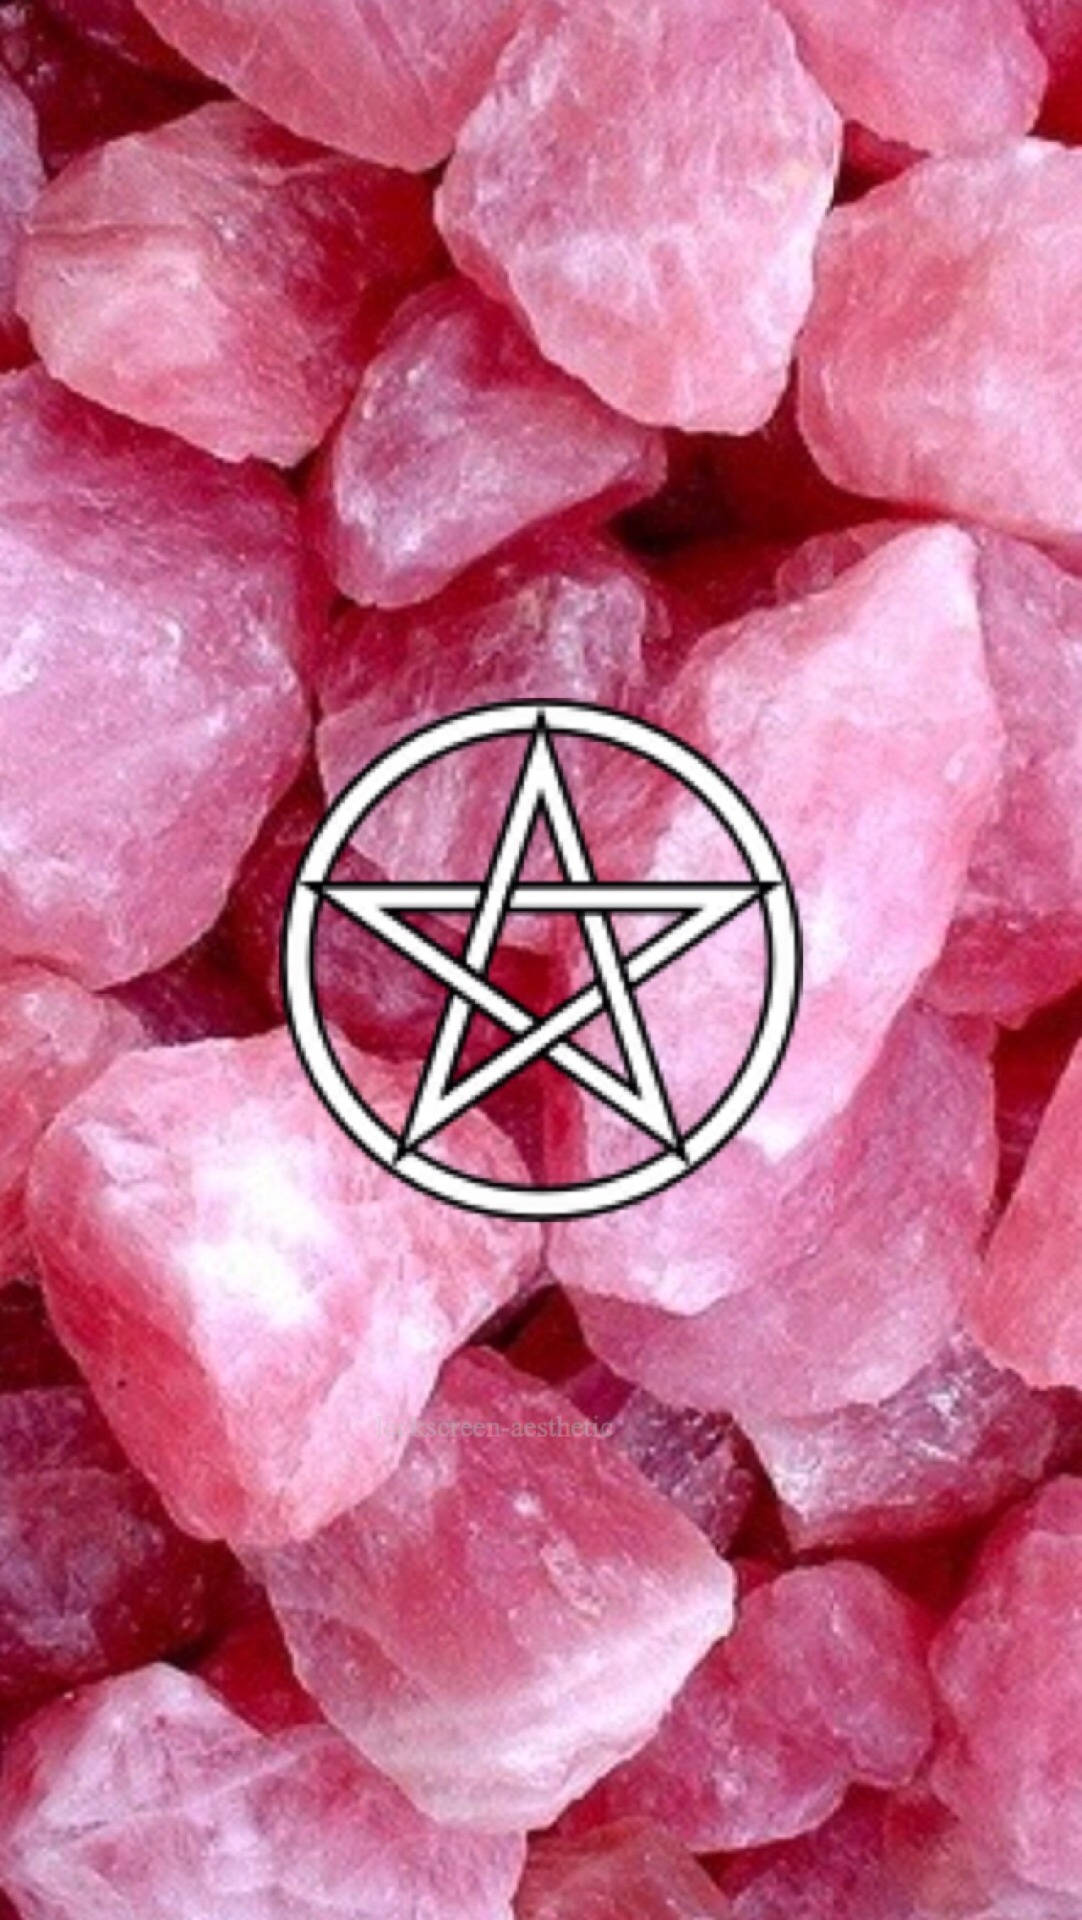 White Pentagram On Pink Rocks